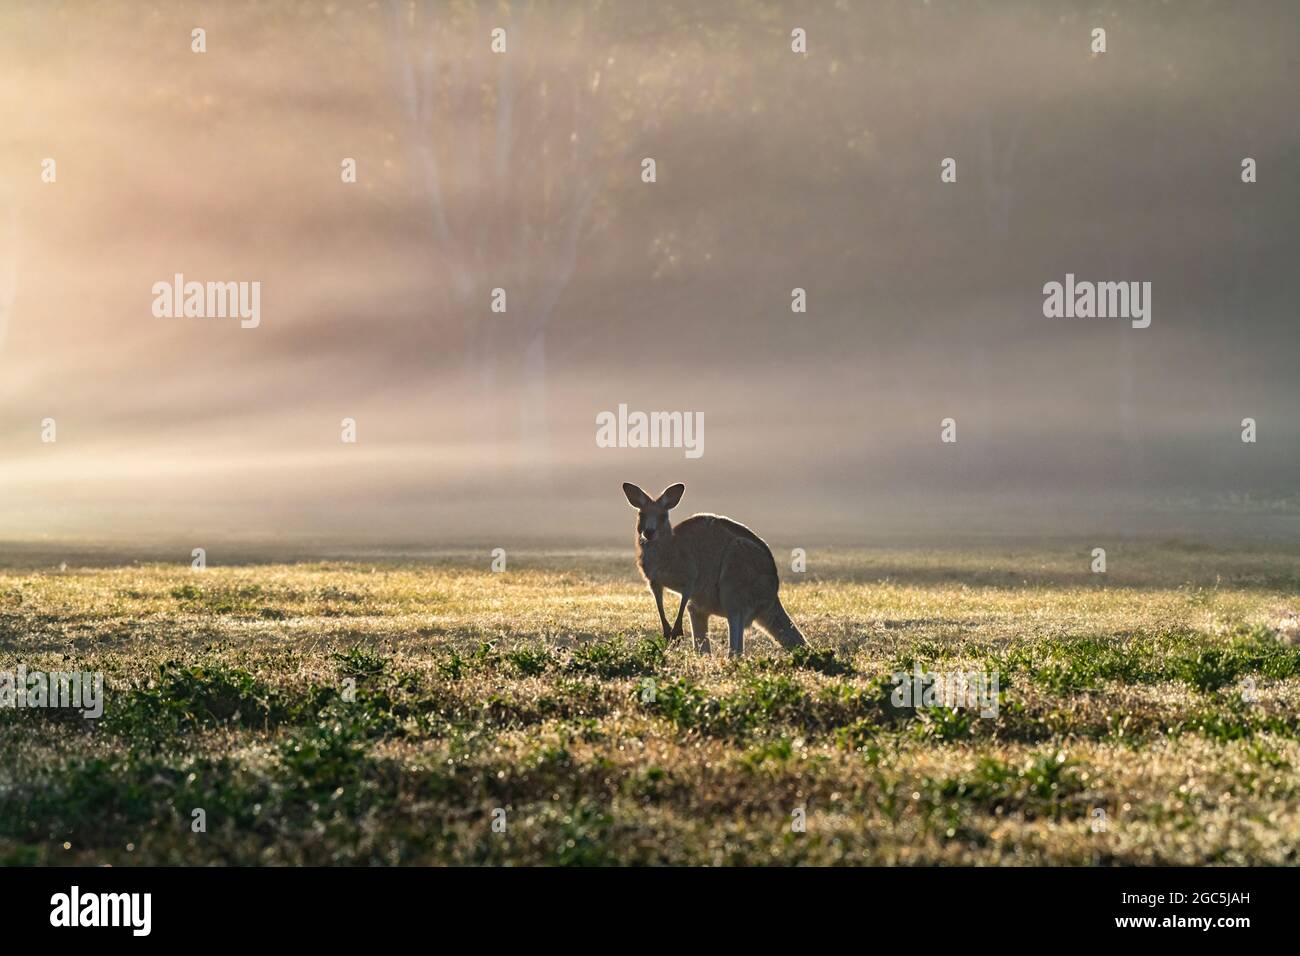 One solitary kangaroo standing with the sun shining through the fog Stock Photo